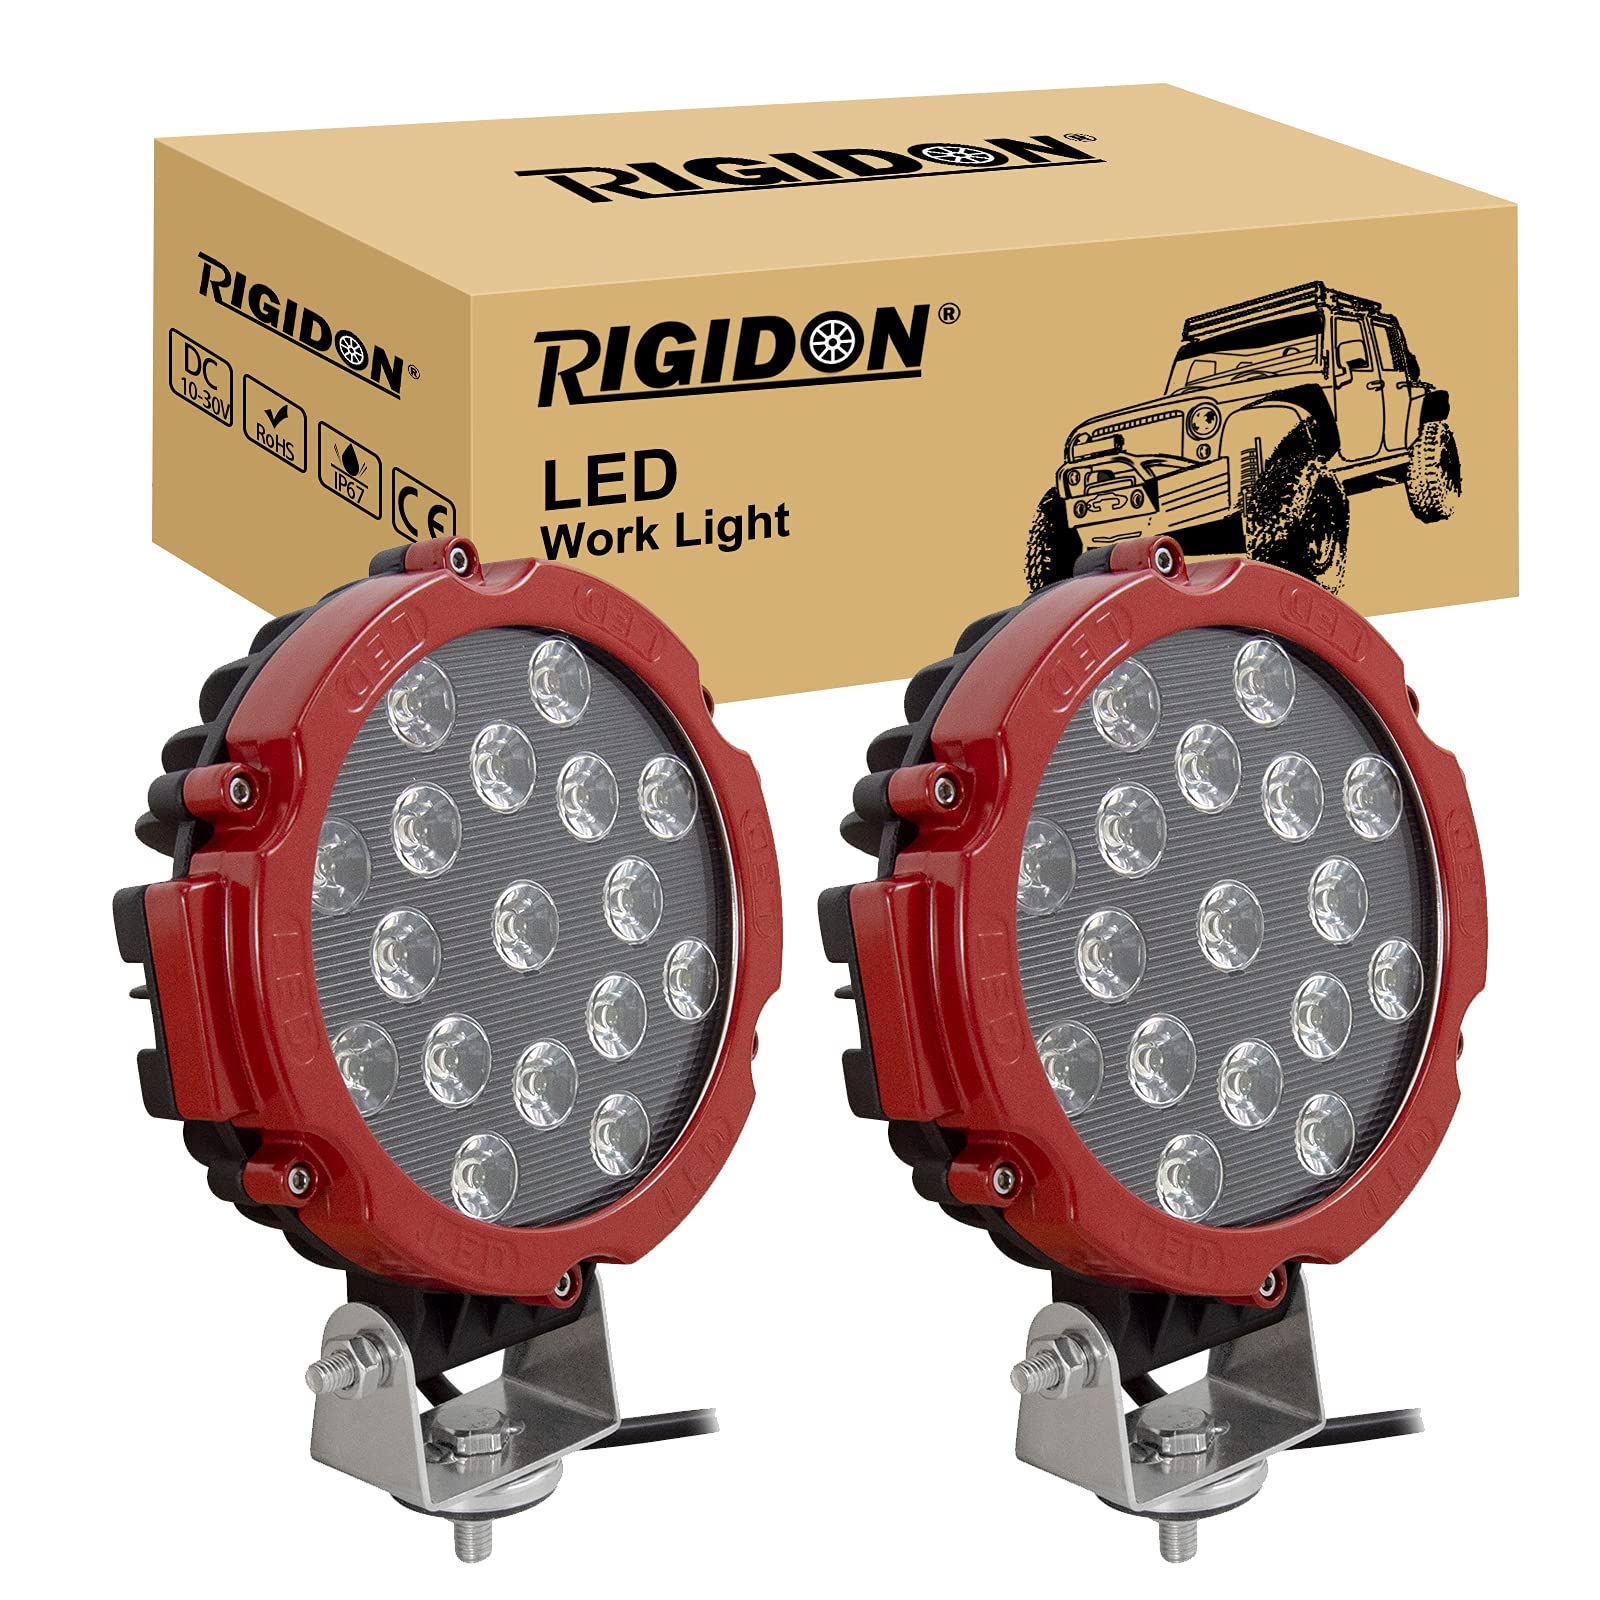 RIGIDON 2 Pcs Rot Auto rund scheinwerfer, 12V 24V 7 Zoll 18cm 51W led flutstrahler, offroad beleuchtung für SUV ATV, Traktor, LKW, 4x4 6000K led nebelscheinwerfer, led arbeitsscheinwerfer von RIGIDON